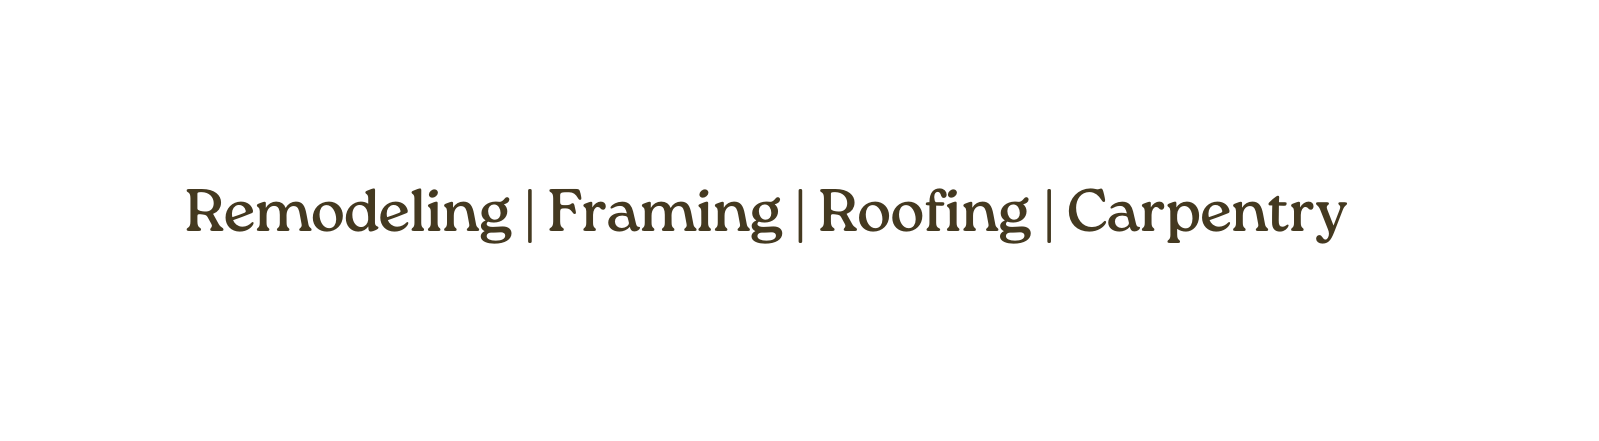 Remodeling Framing Roofing Carpentry